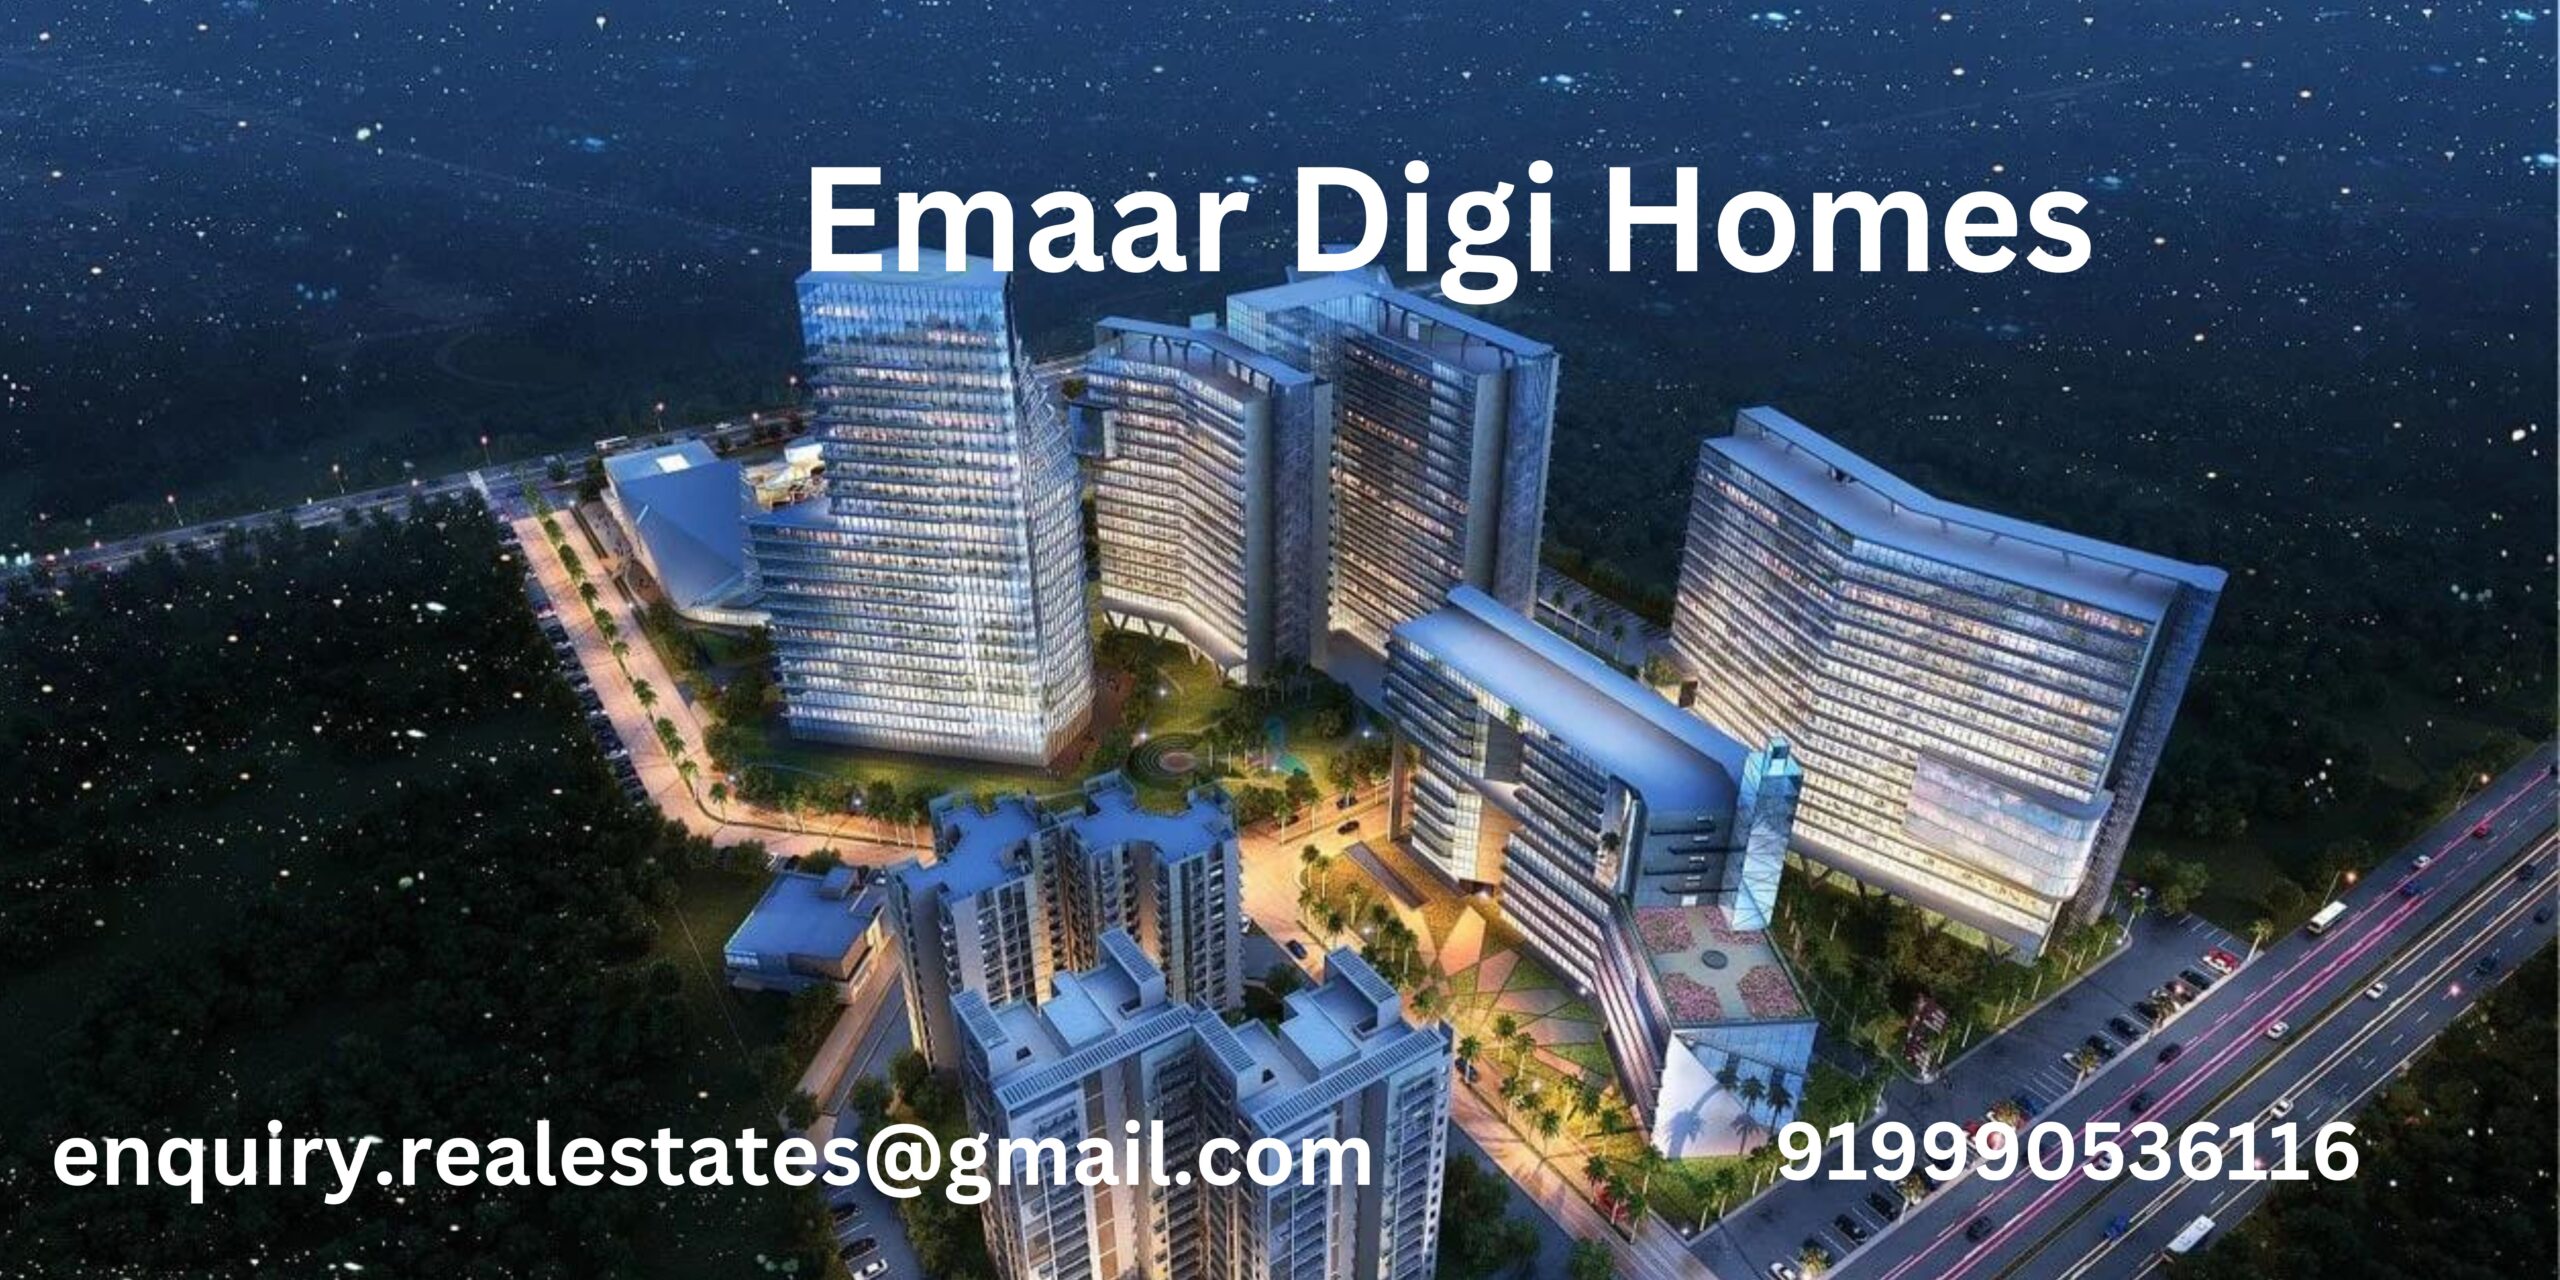 Emaar Digi Homes Gurgaon Invites You to a World of Luxury